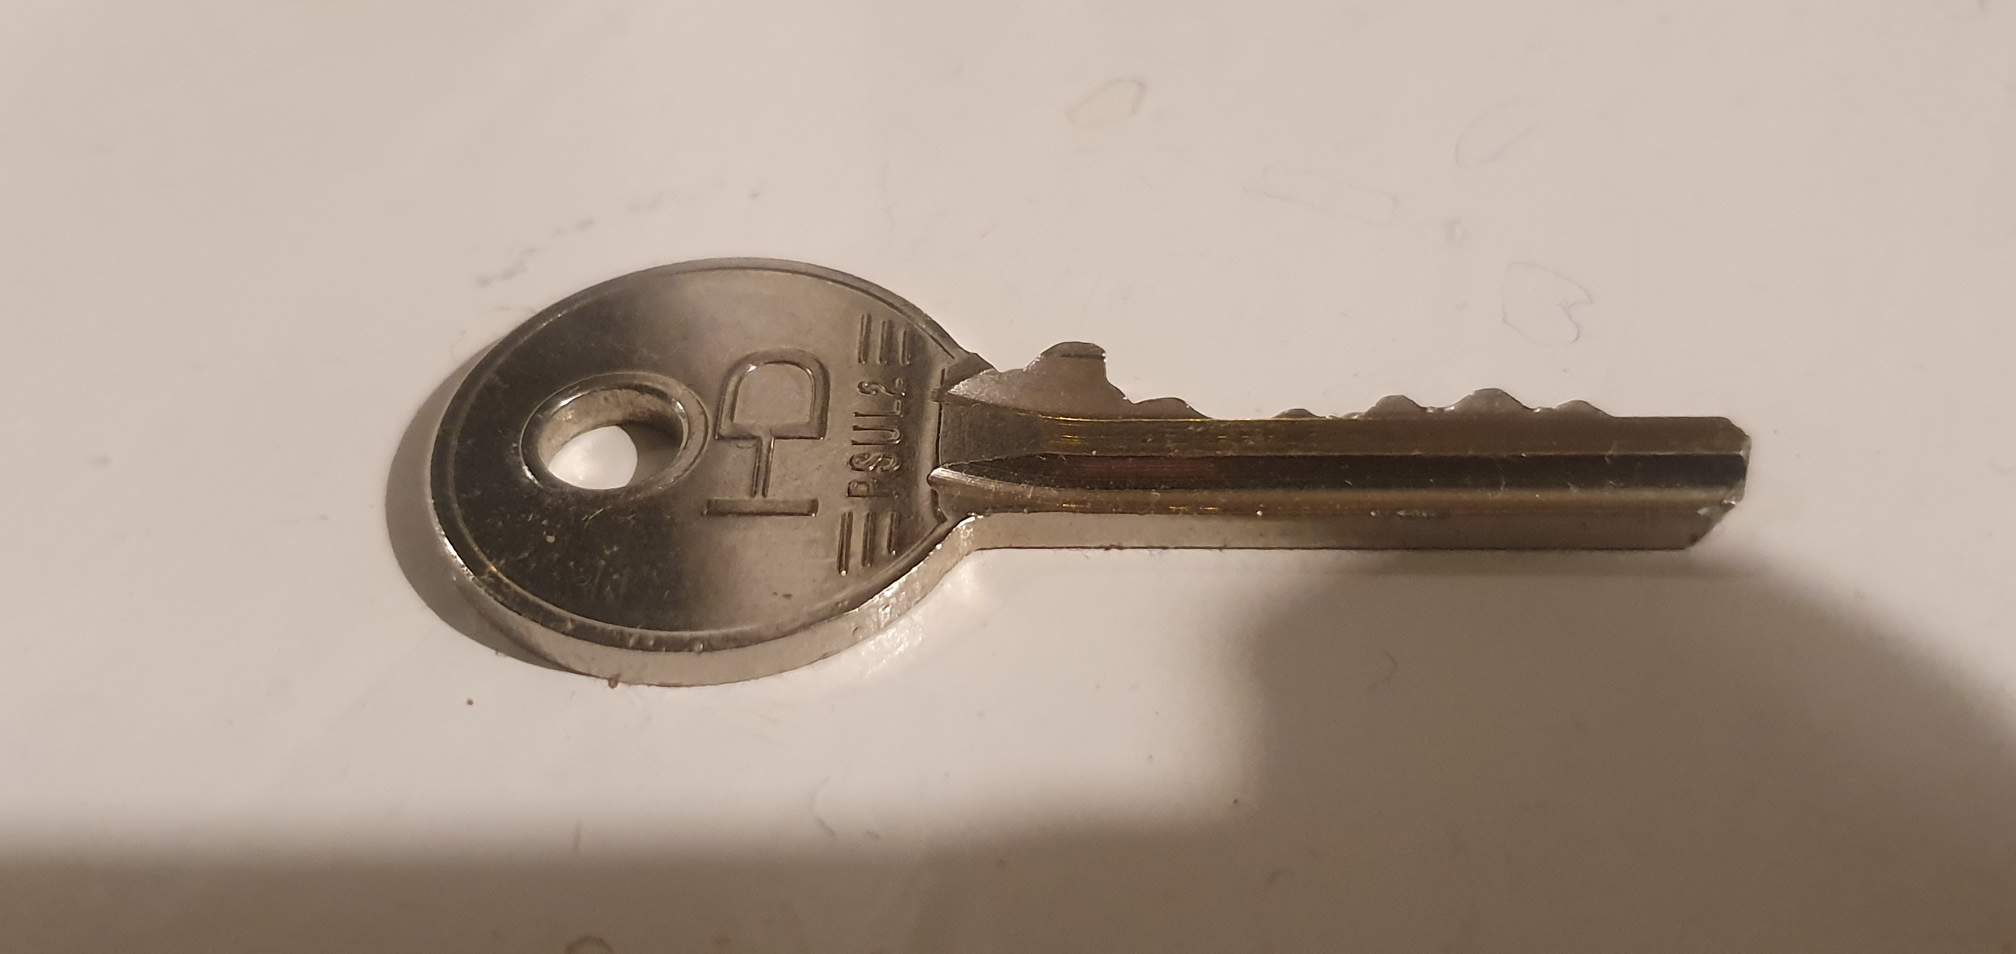 flat key